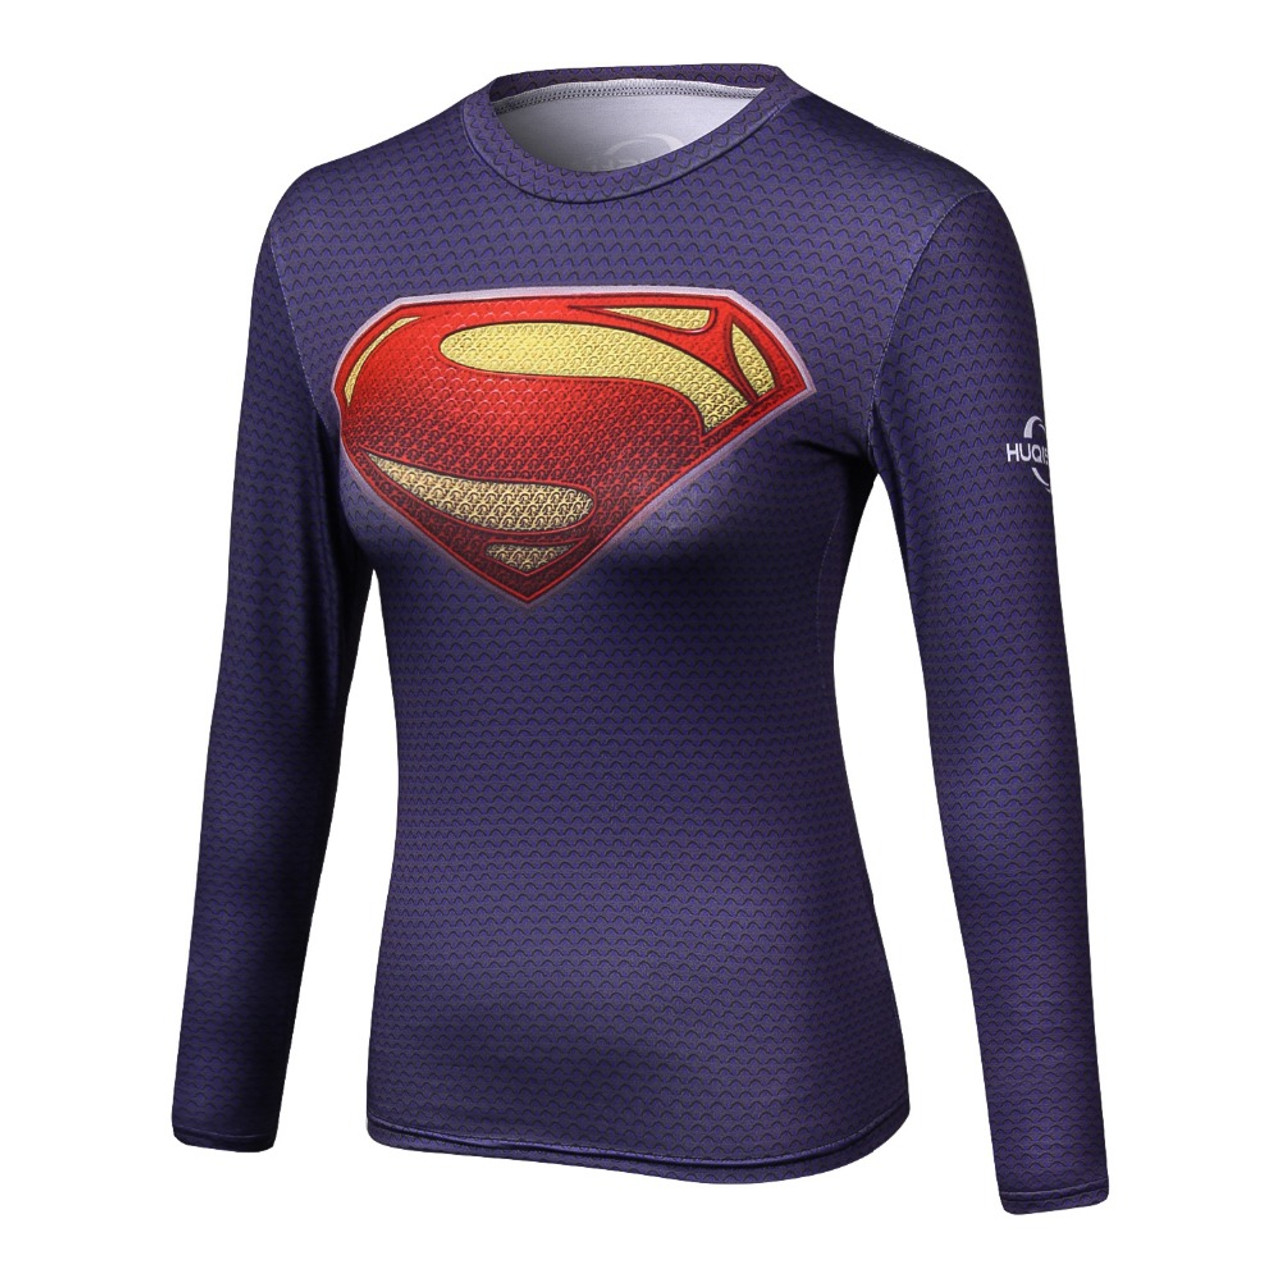 womens superhero shirts target